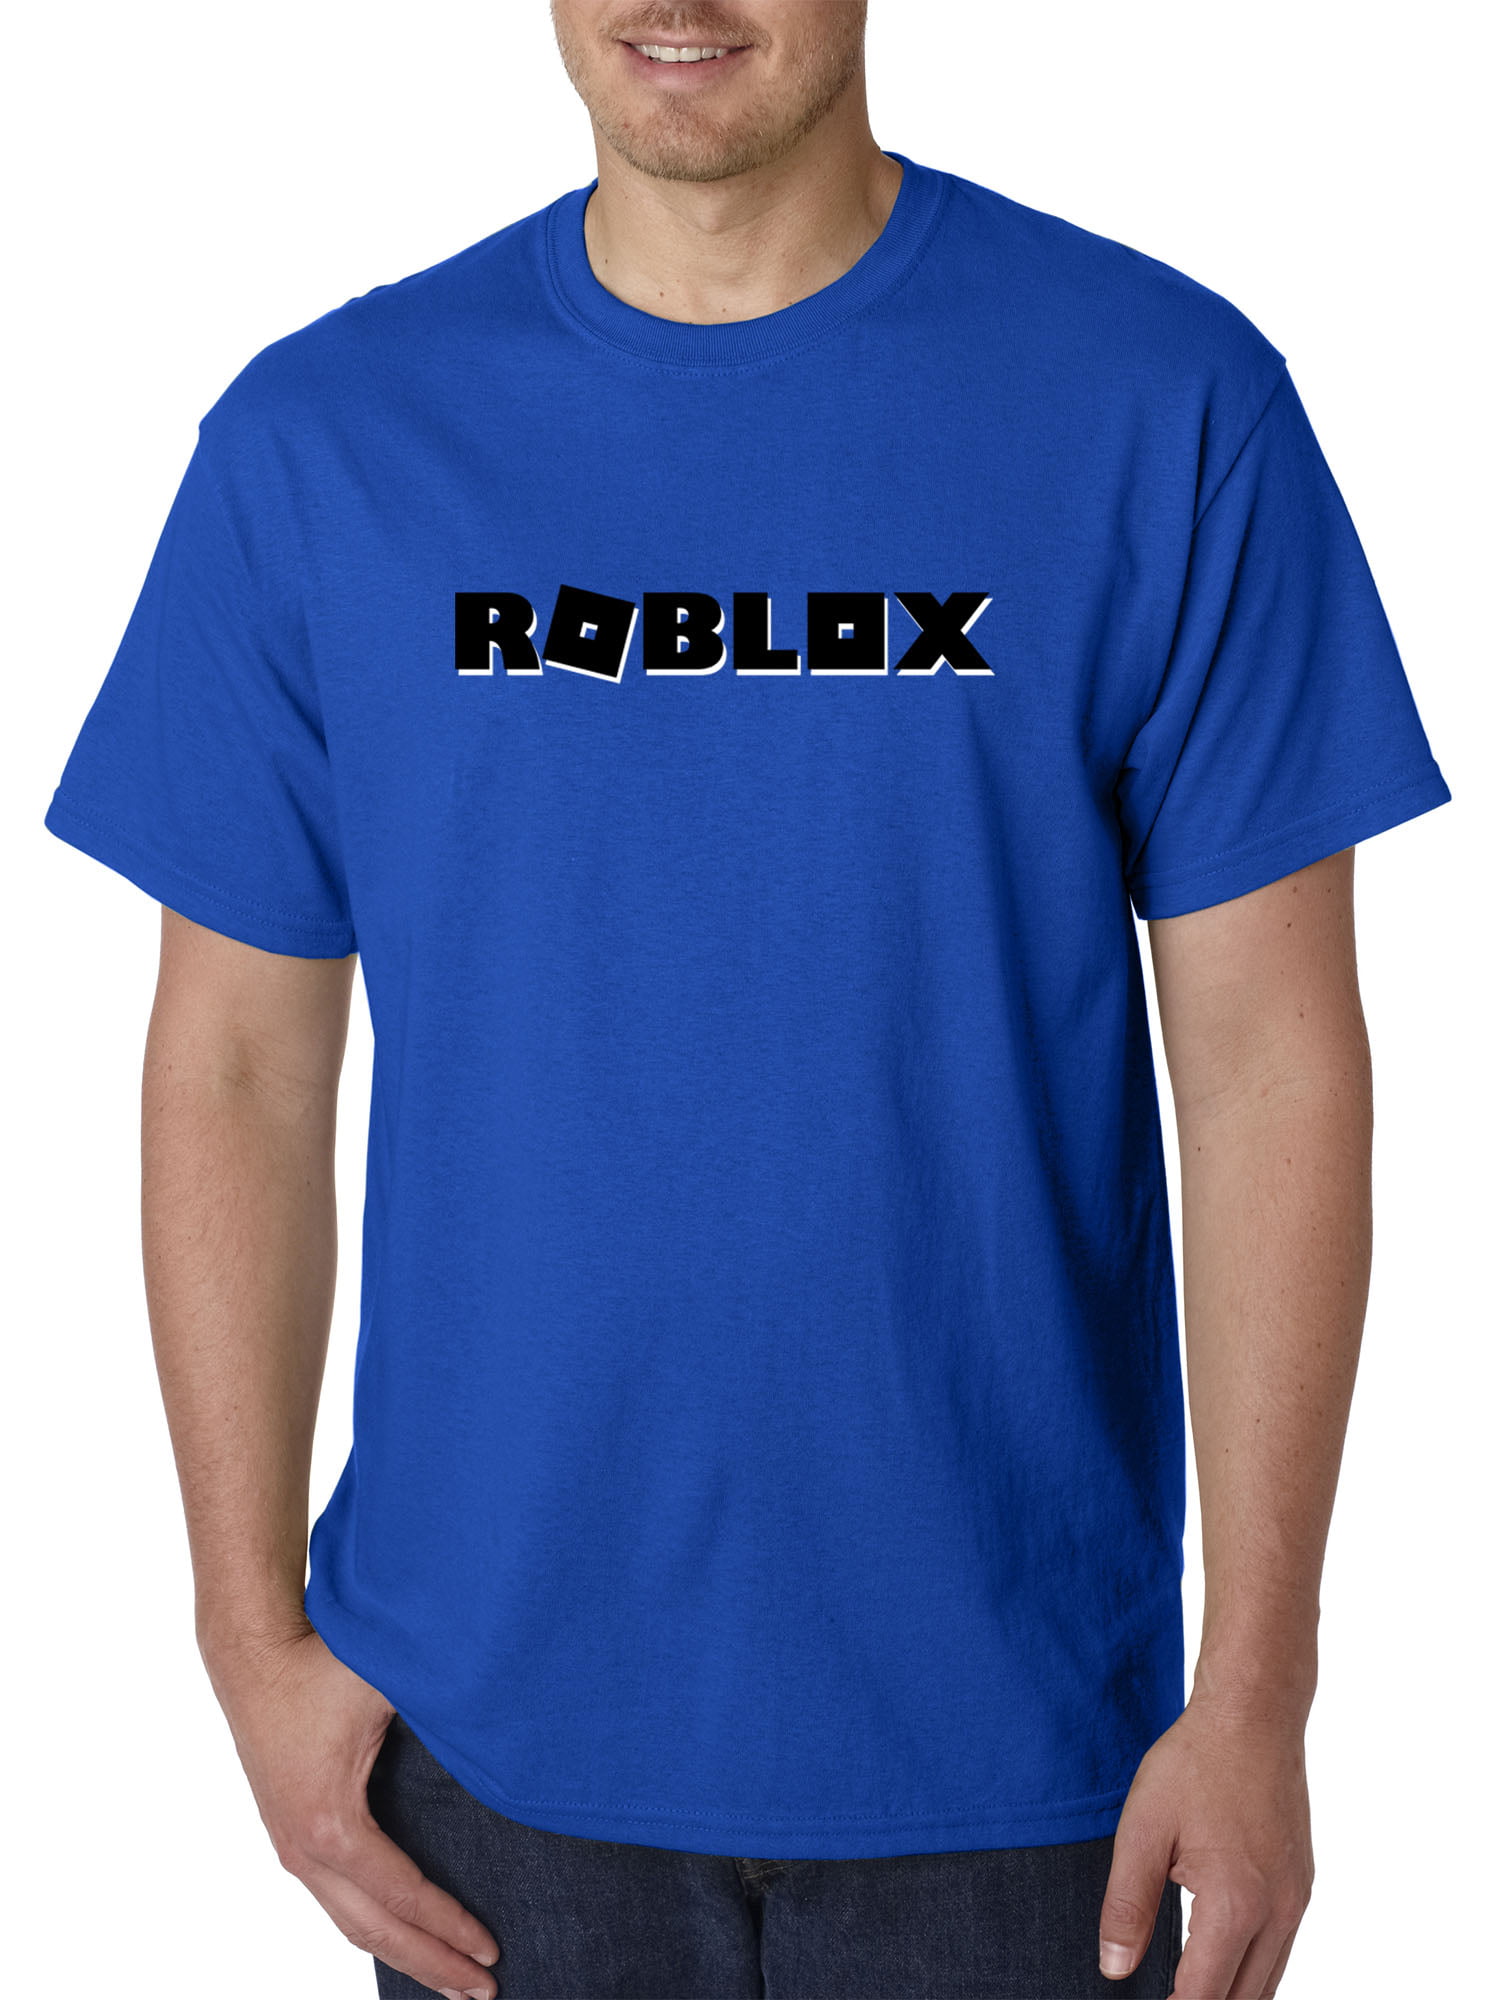 New Way New Way 1168 Unisex T Shirt Roblox Block Logo Game Accent Medium Royal Blue Walmart Com - roblox blue logo t shirt roblox